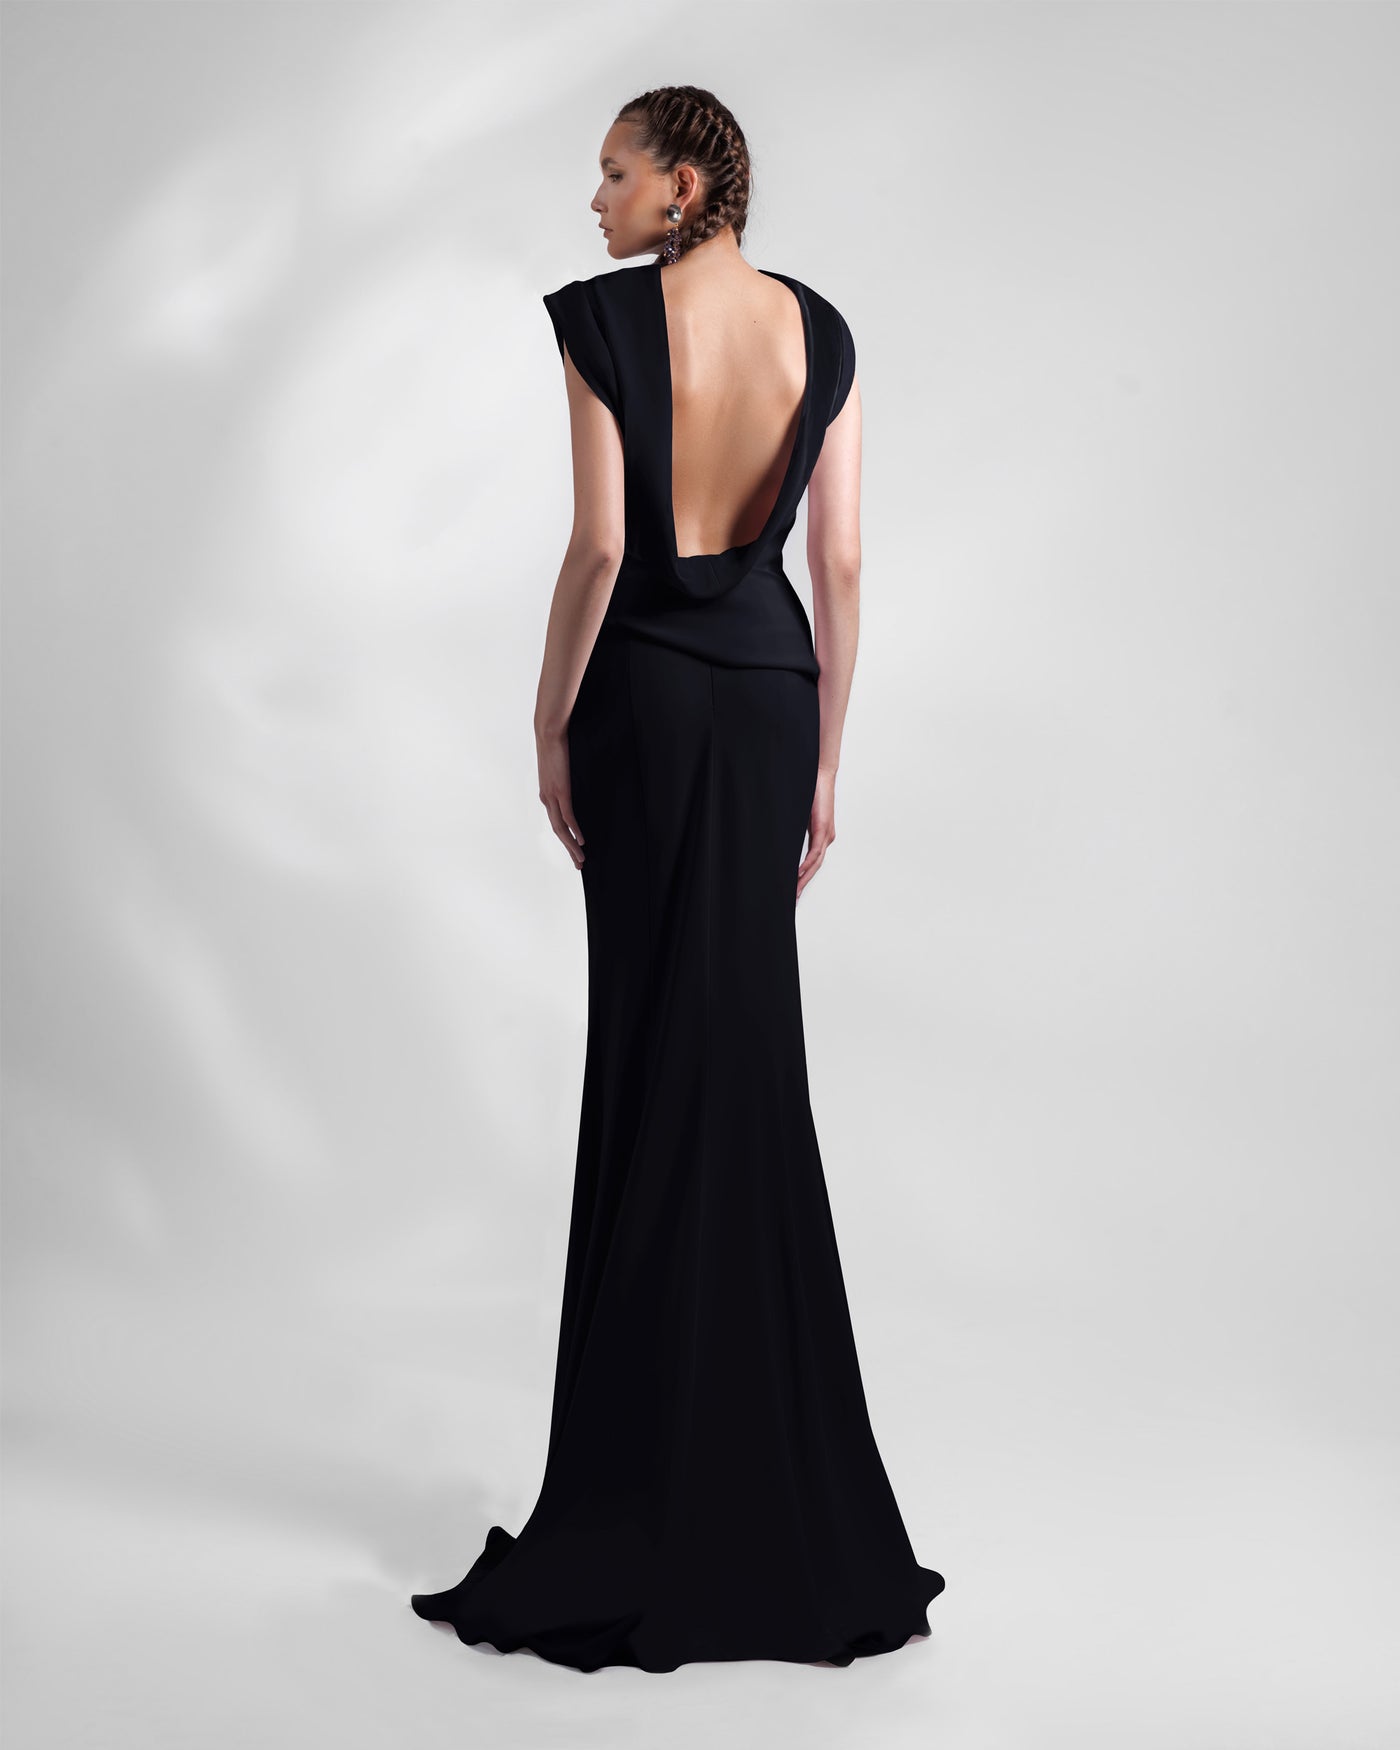 Black High-Collar Neckline Dress